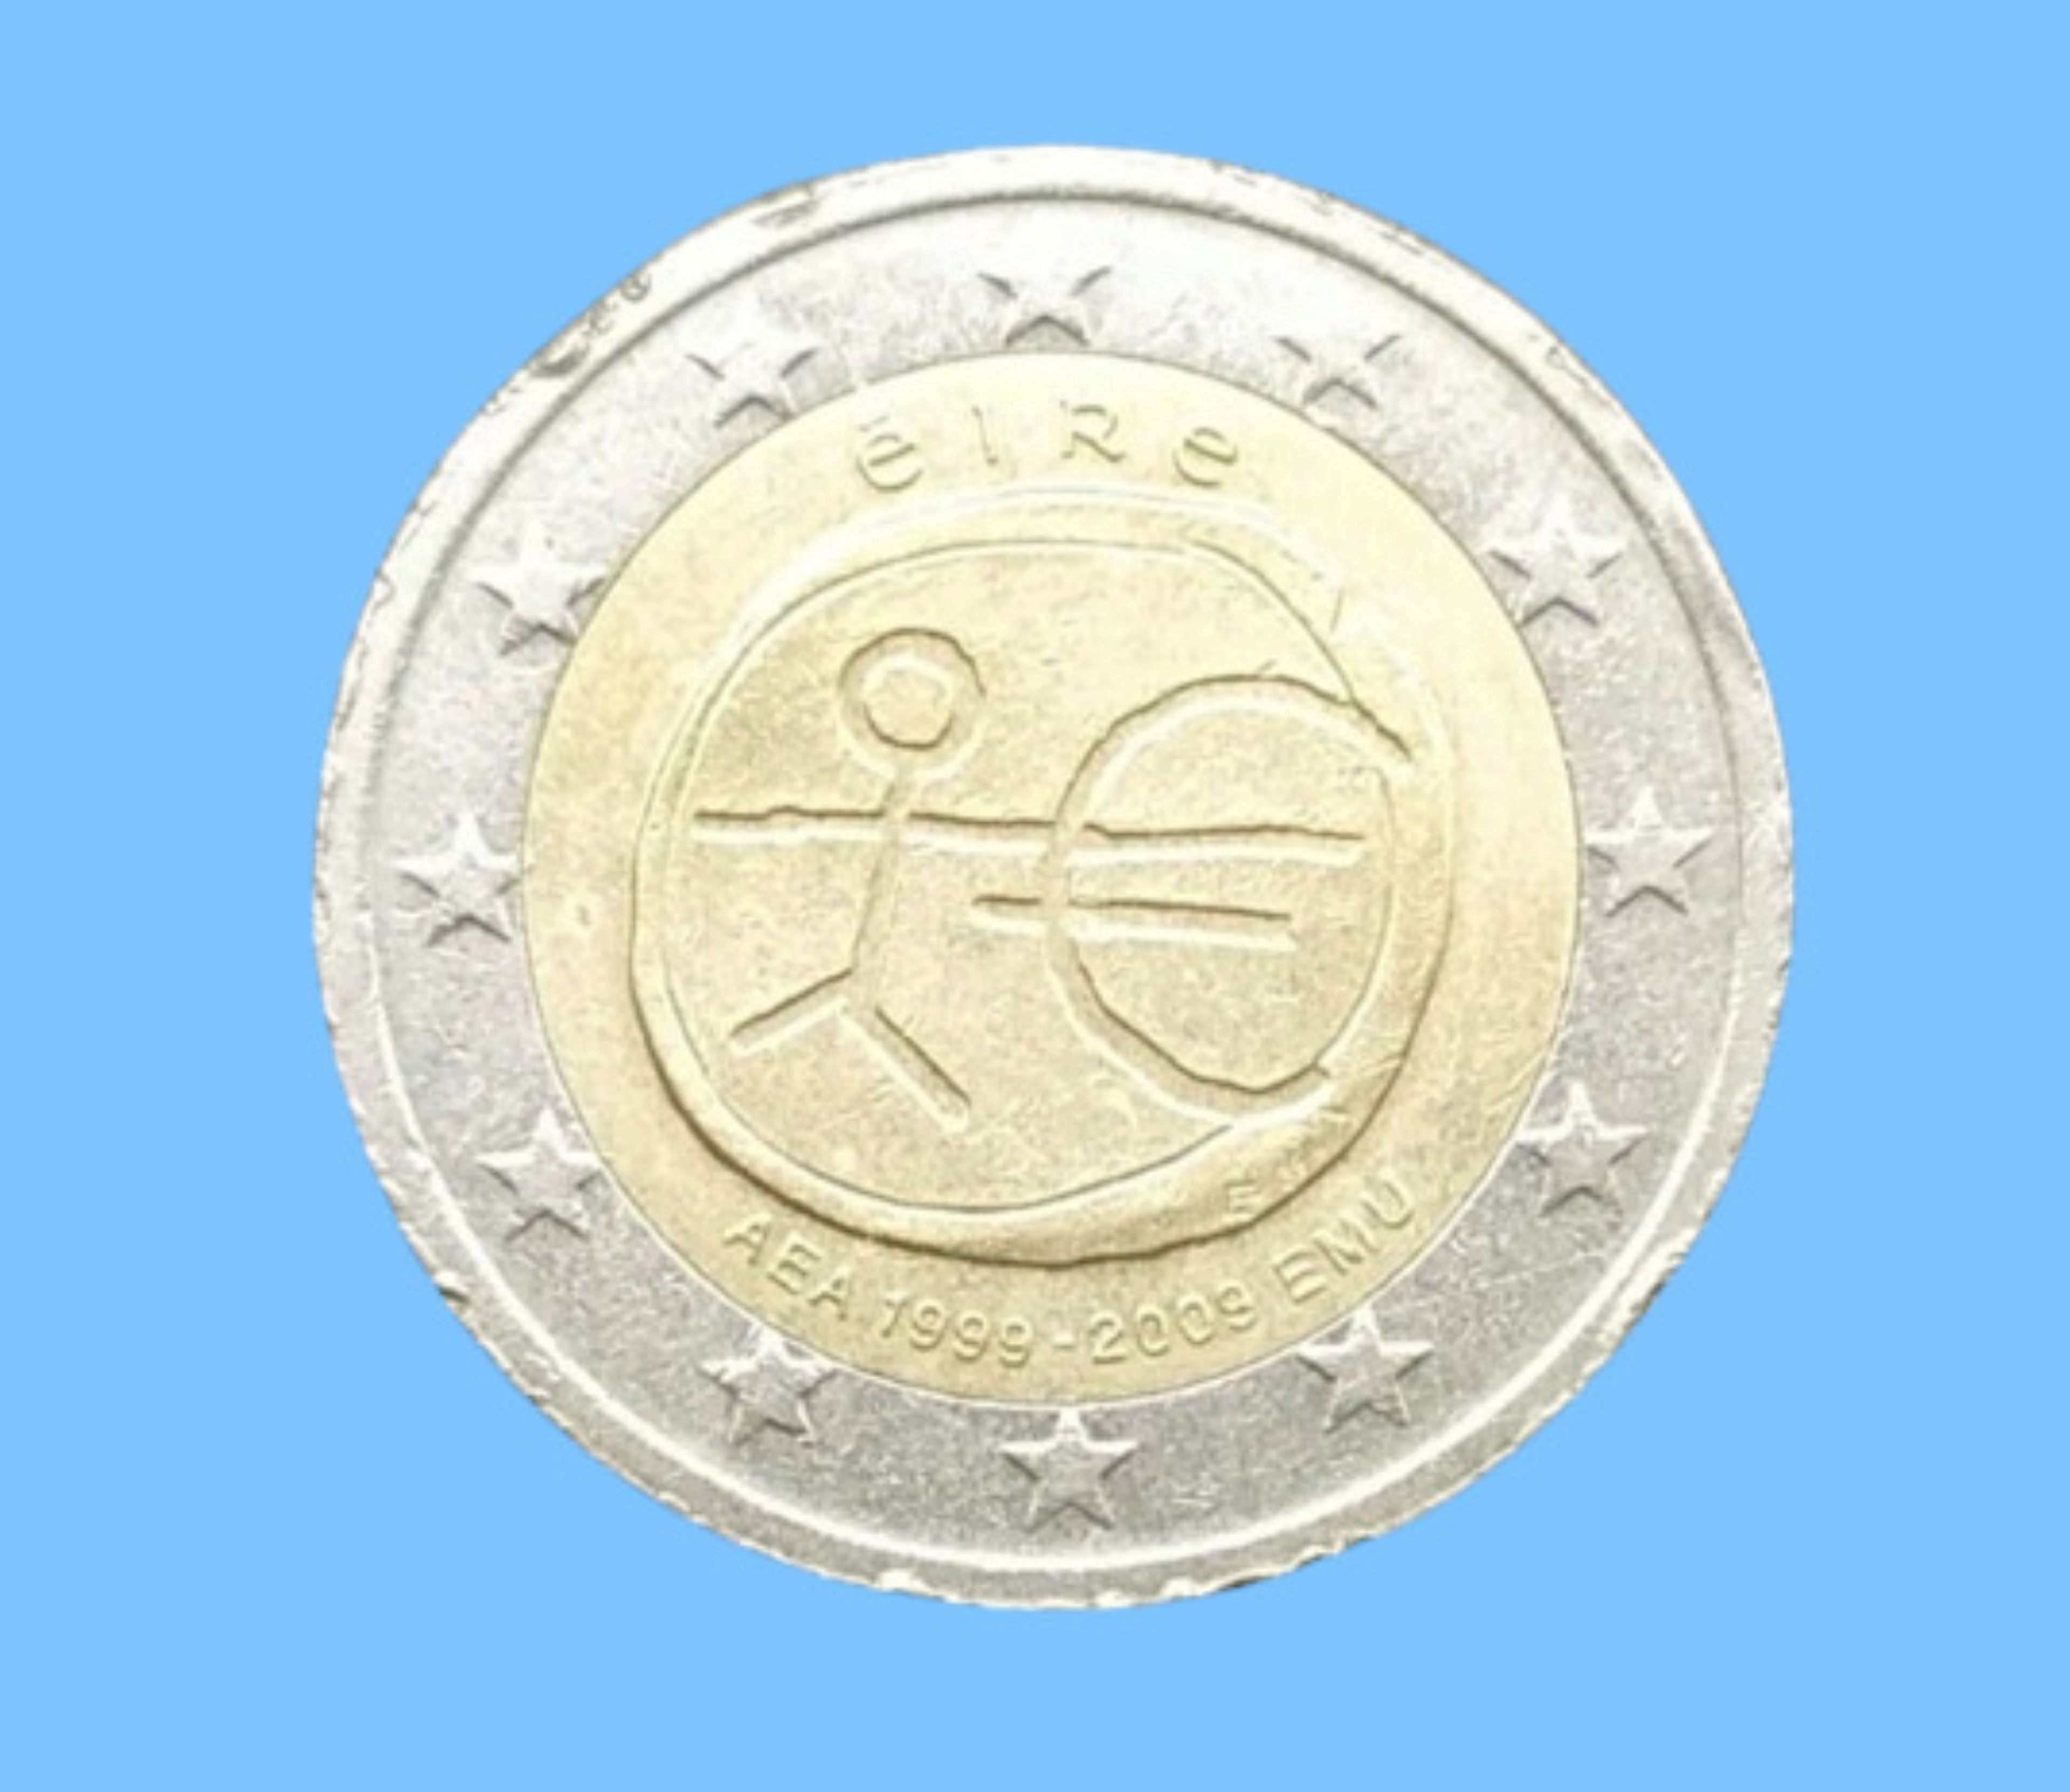 Moneda de 2 euros rara